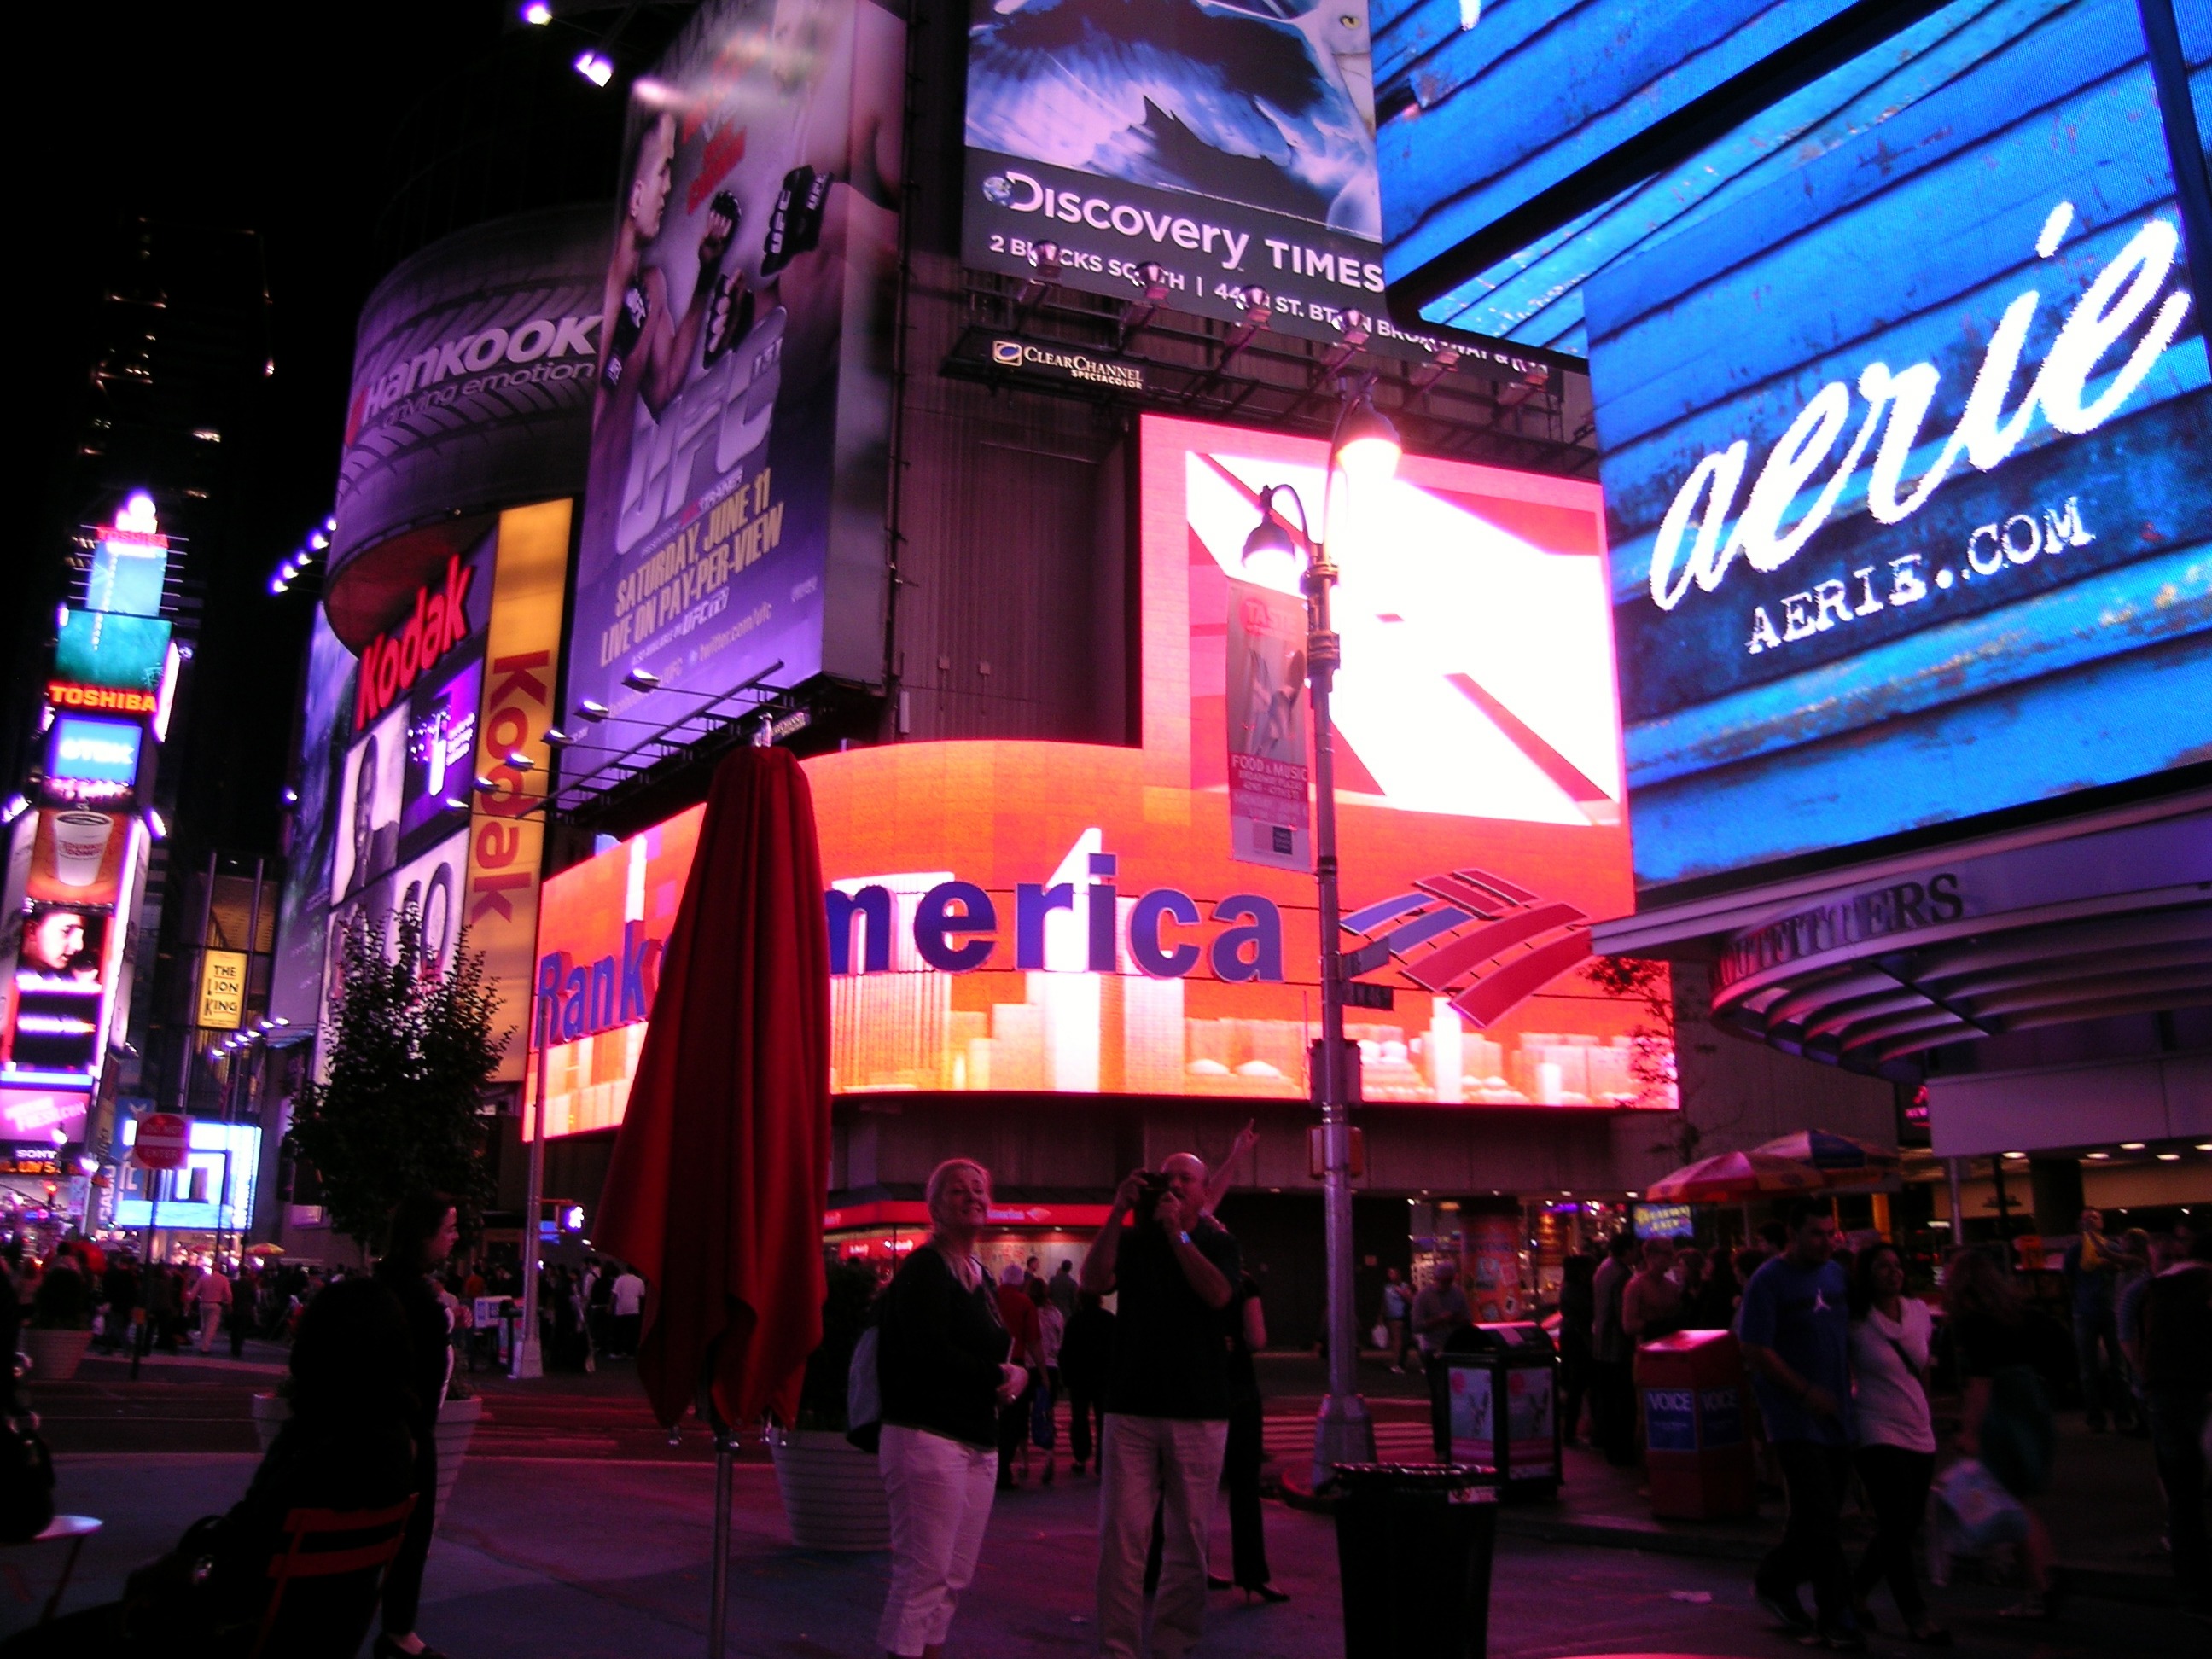 Broadway new york free image